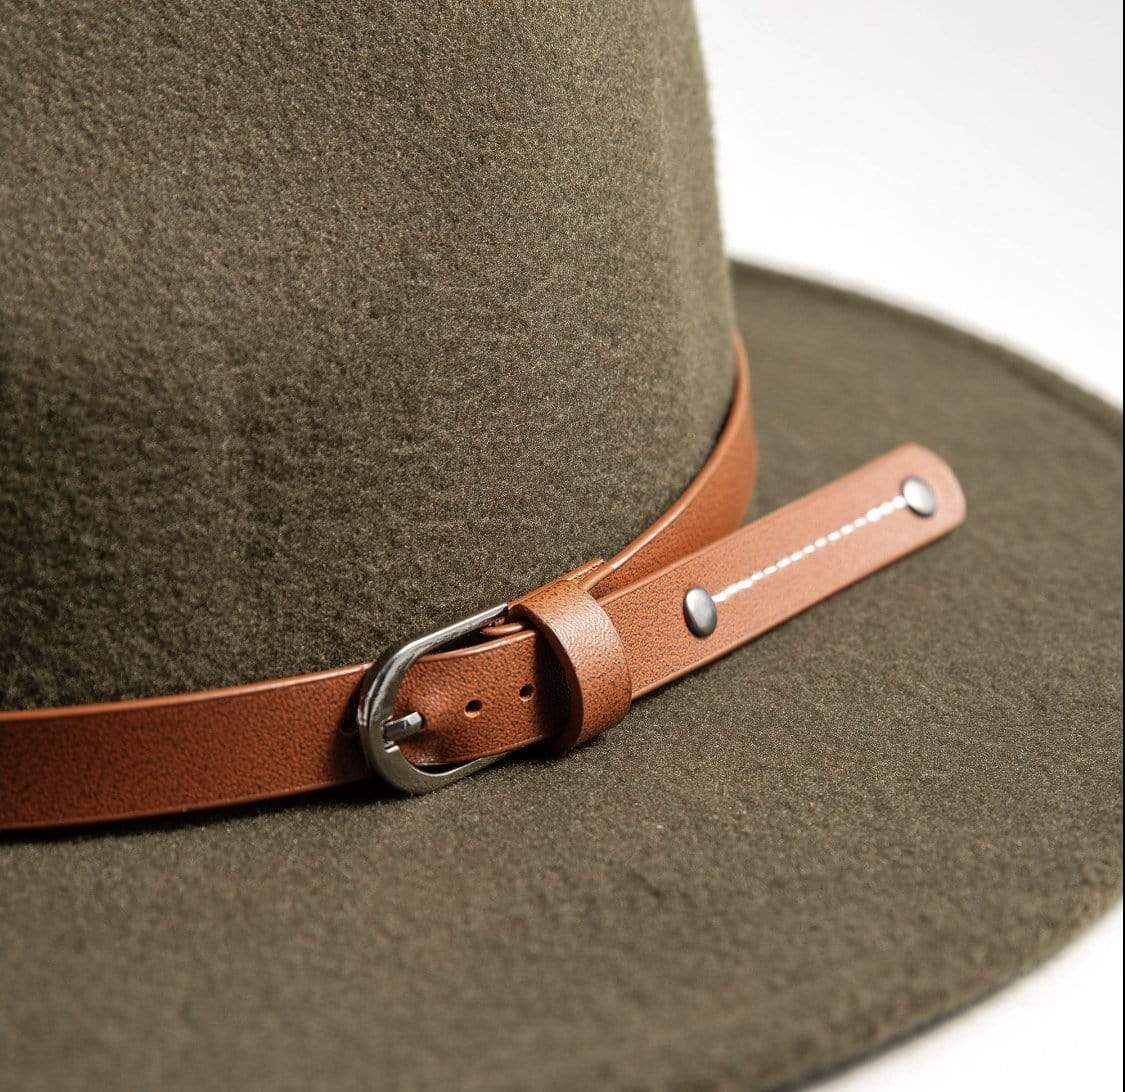 Avenue Zoe Boho Faux Wool Felt Panama Hat with leather Strap